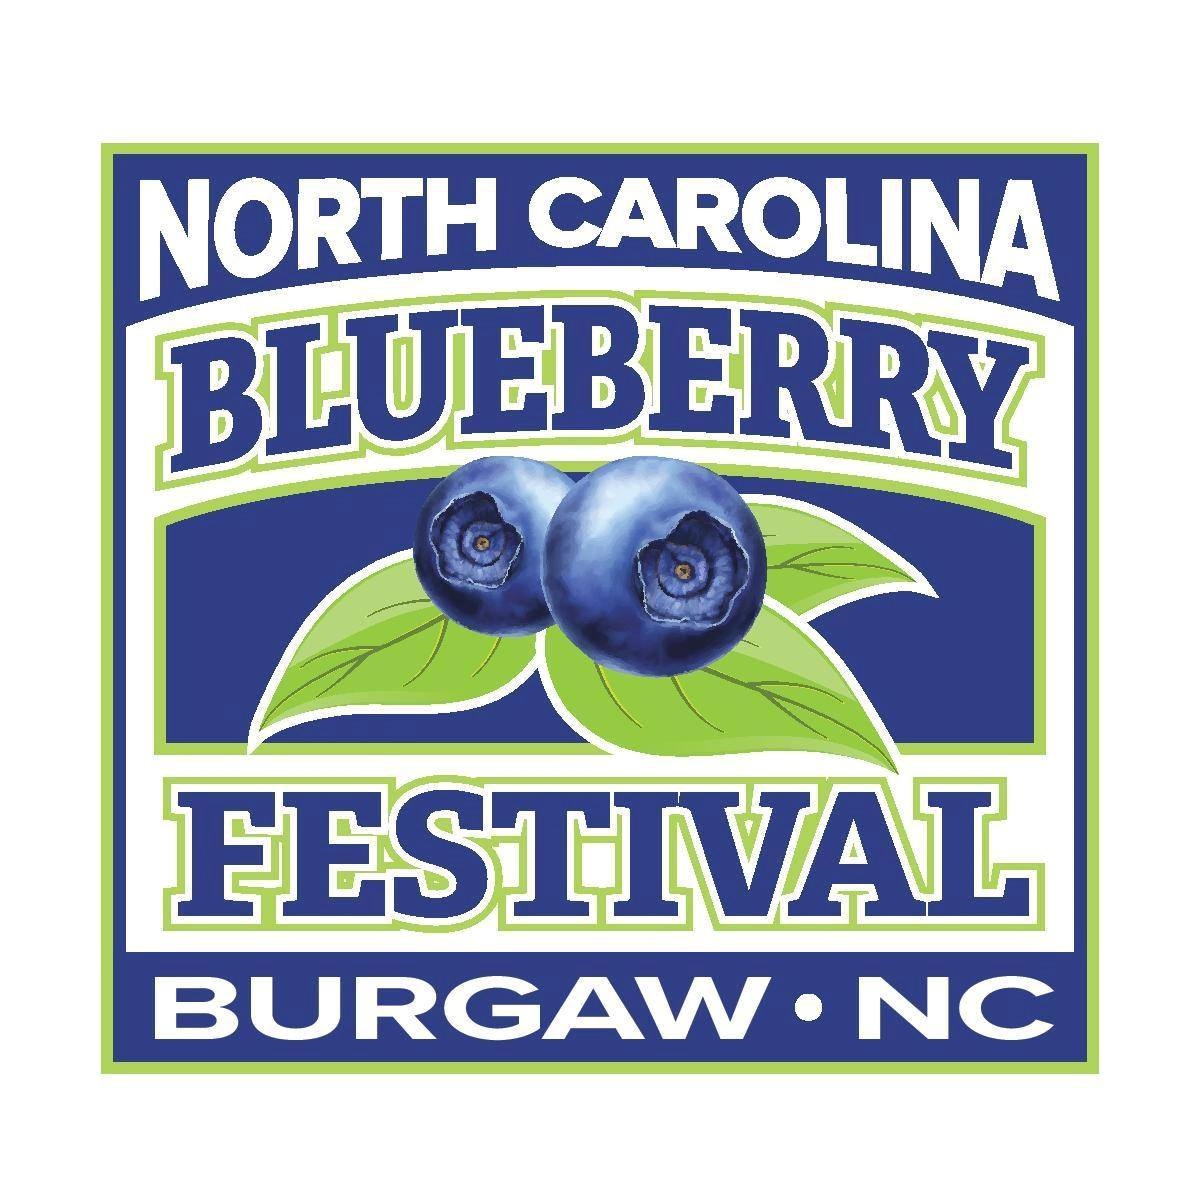 North Carolina Blueberry Festival